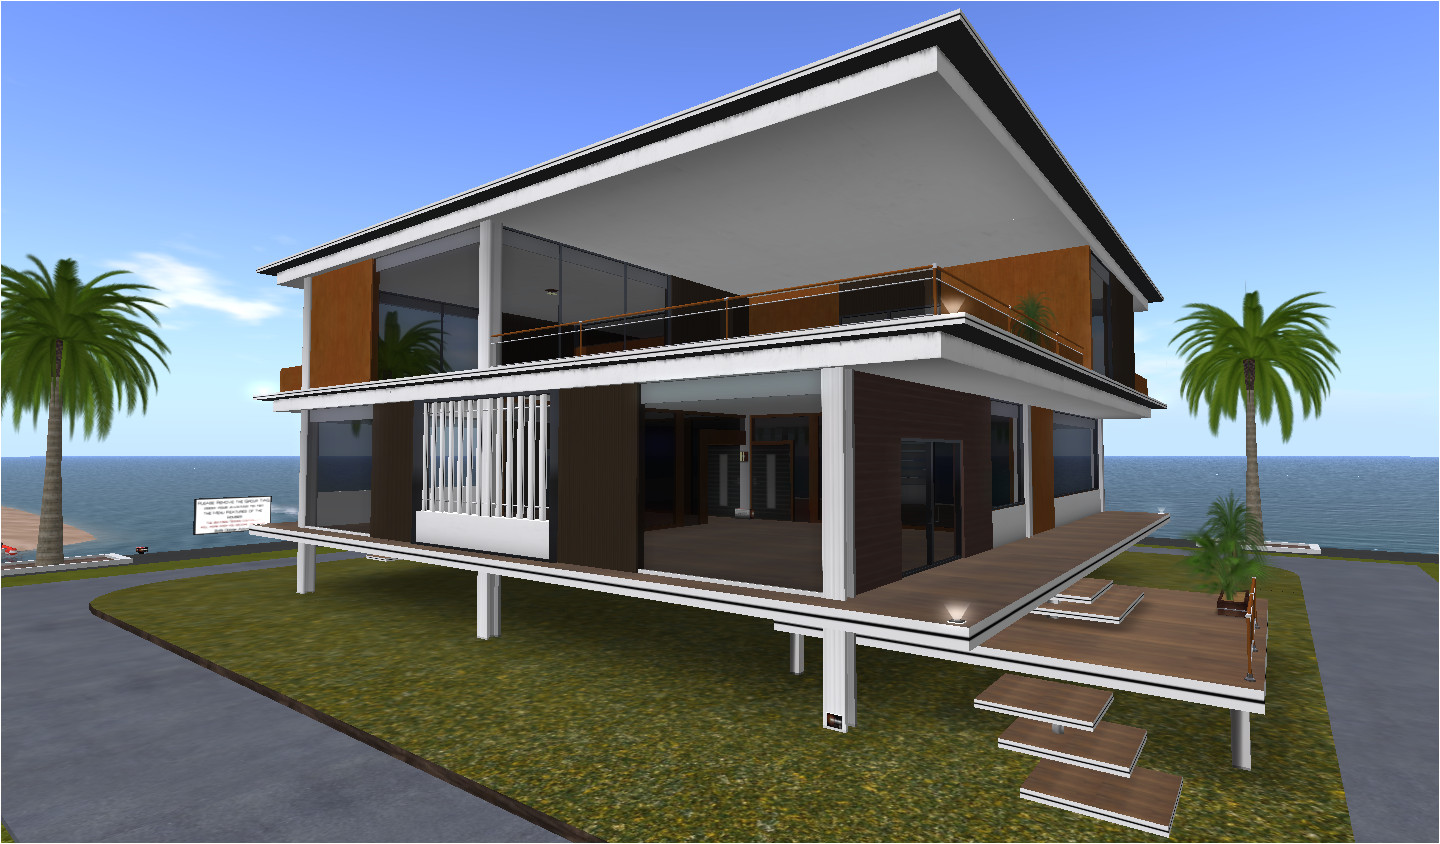 Home Architectural Plans House Architecture Designs Amazing Exterior Architectural